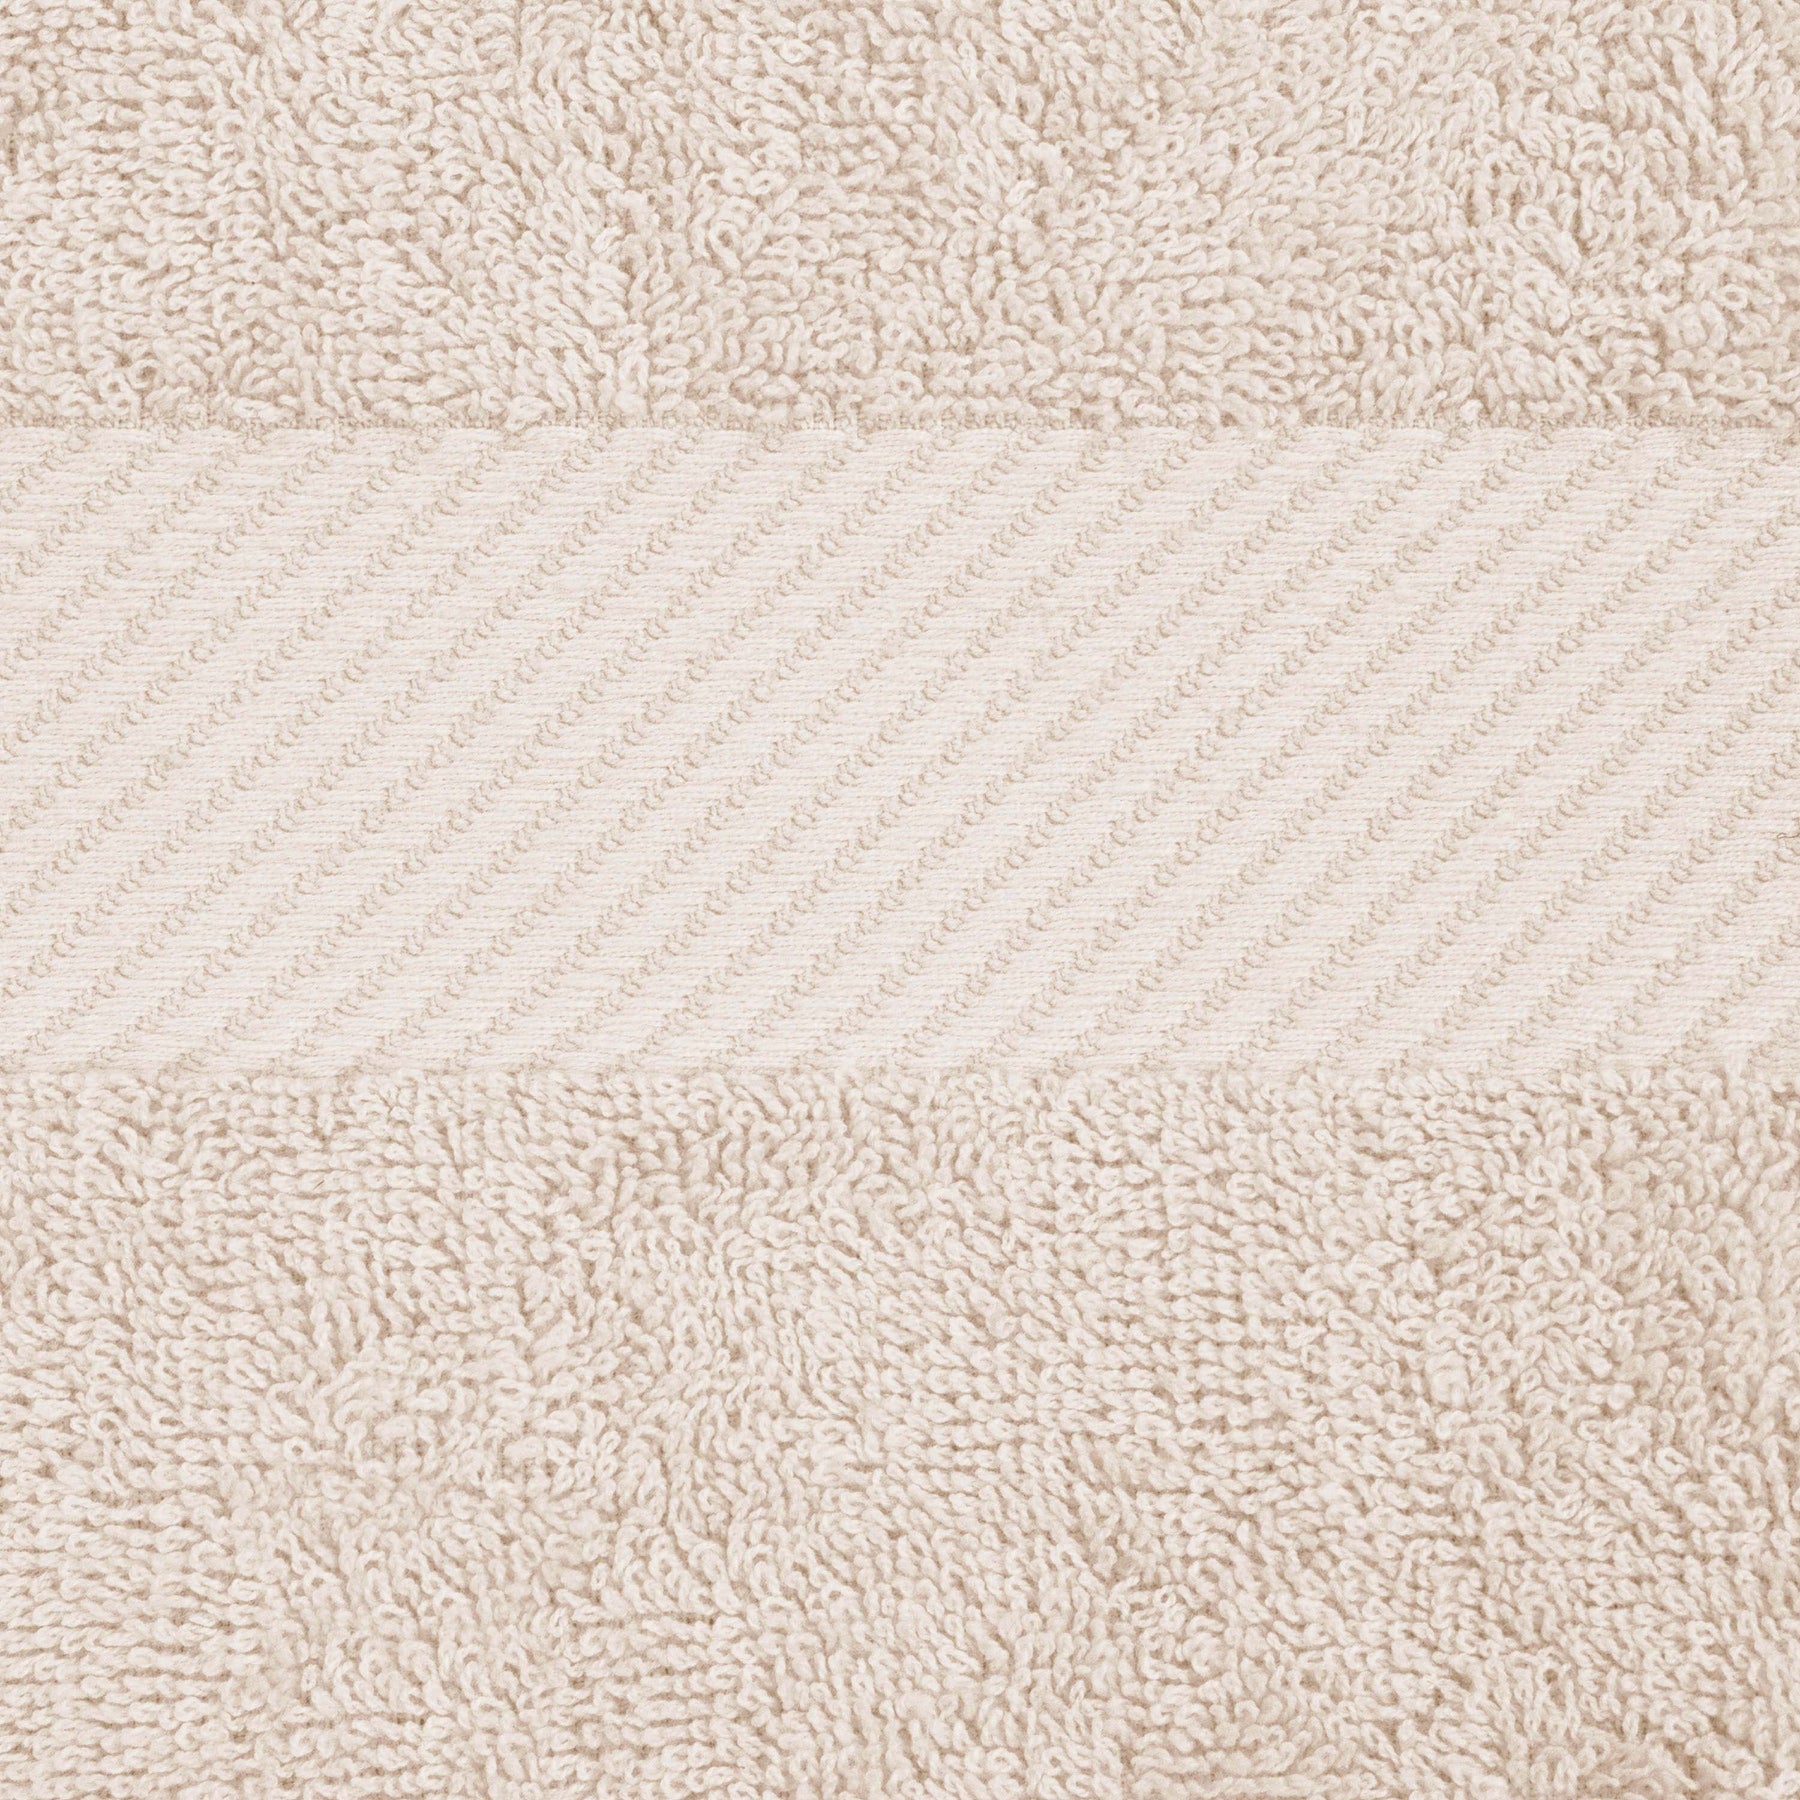 Egyptian Cotton Dobby Border Medium Weight 6 Piece Towel Set